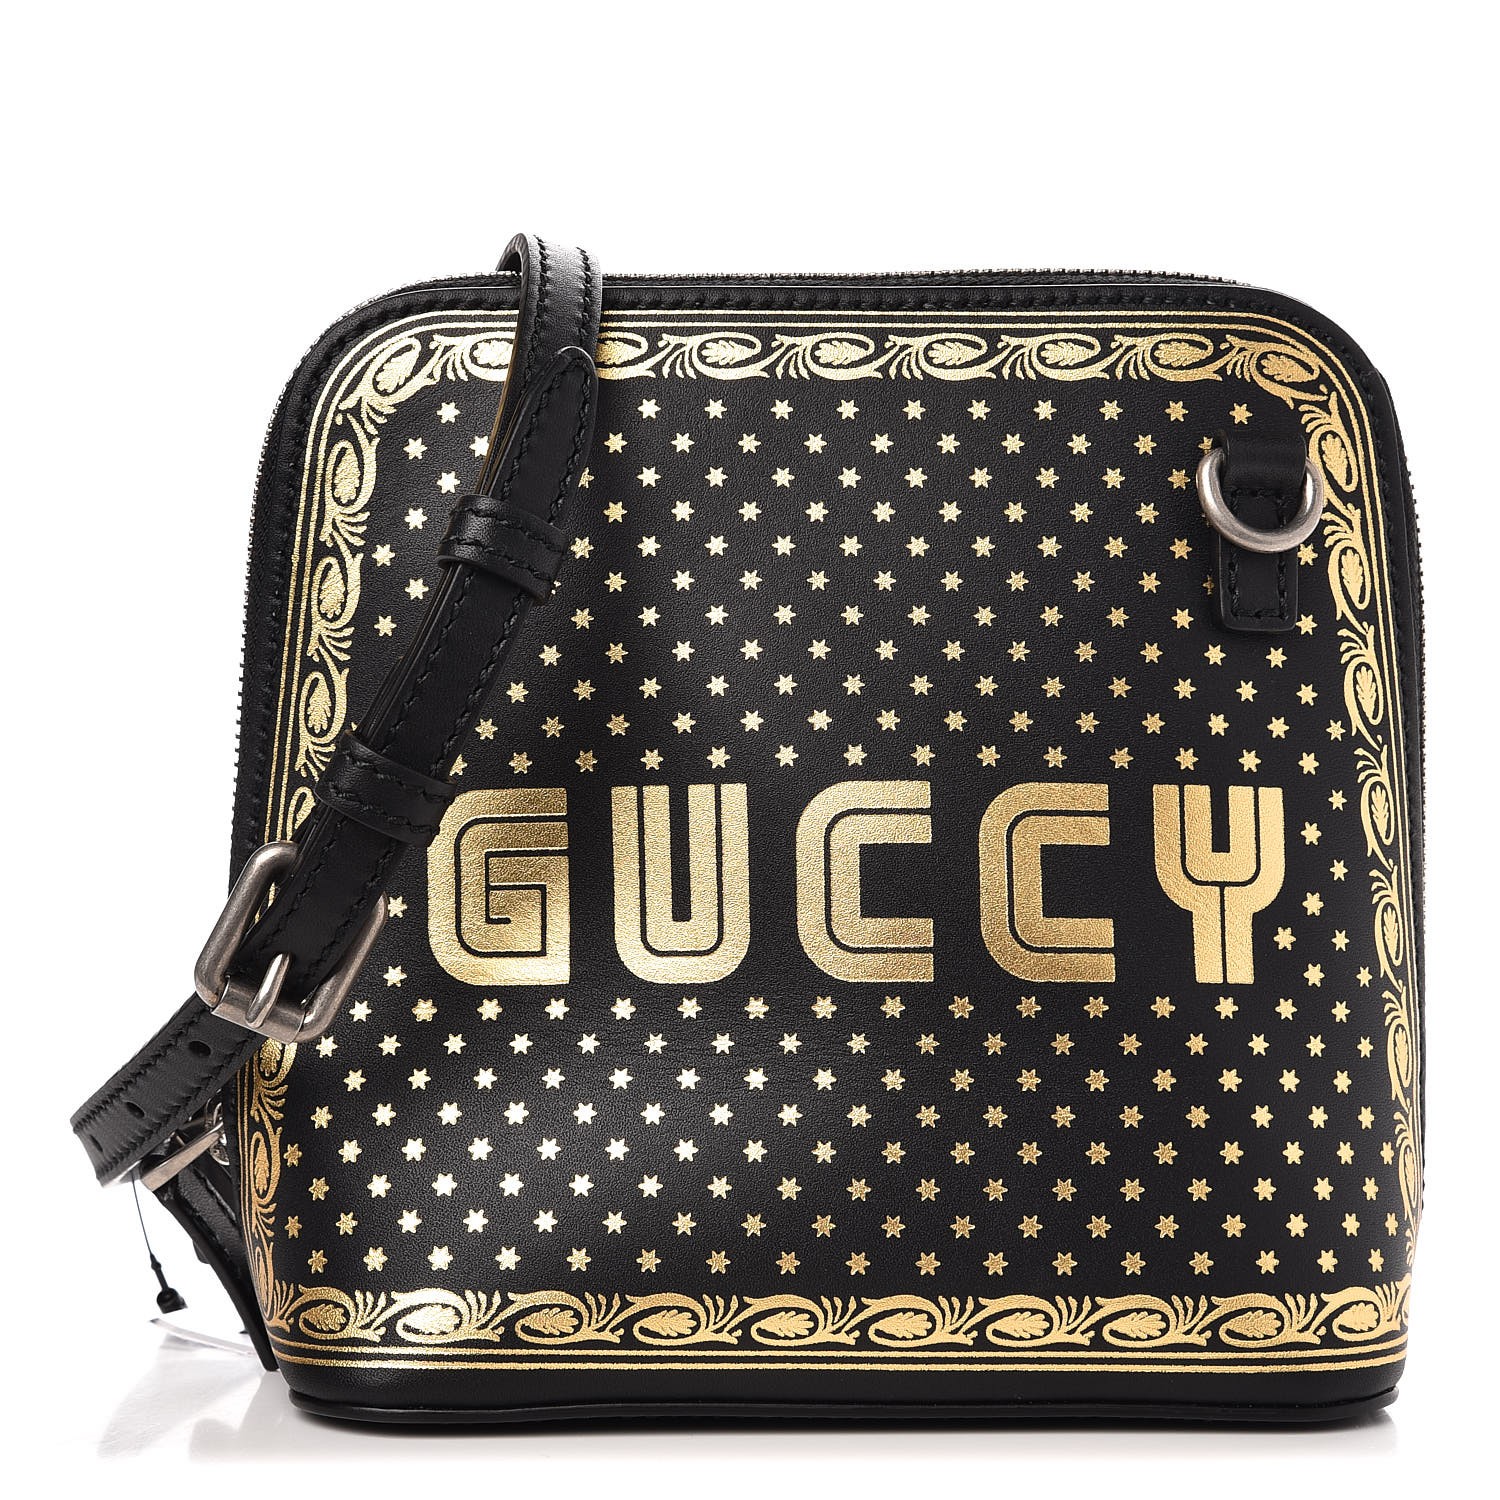 GUCCI Calfskin Mini Guccy Shoulder Bag Black Gold 258626